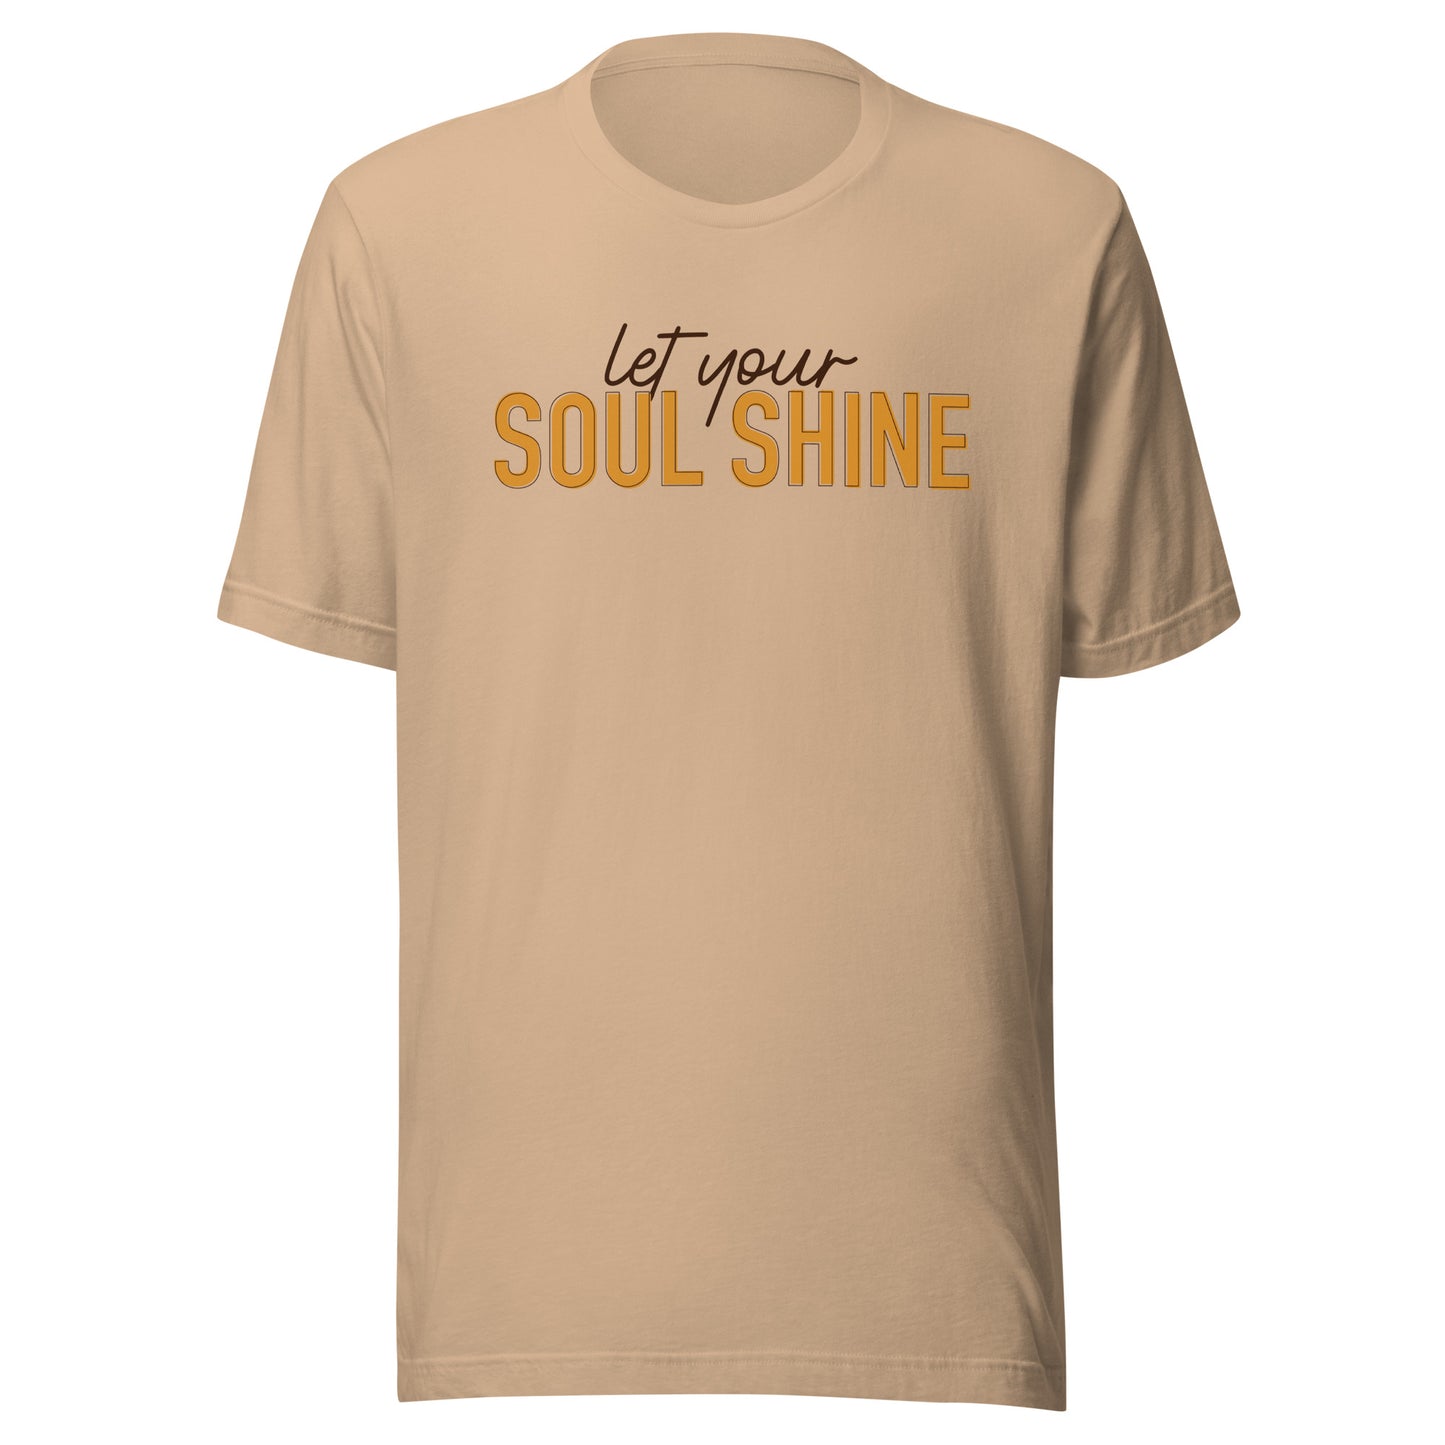 Let Your Soul Shine!